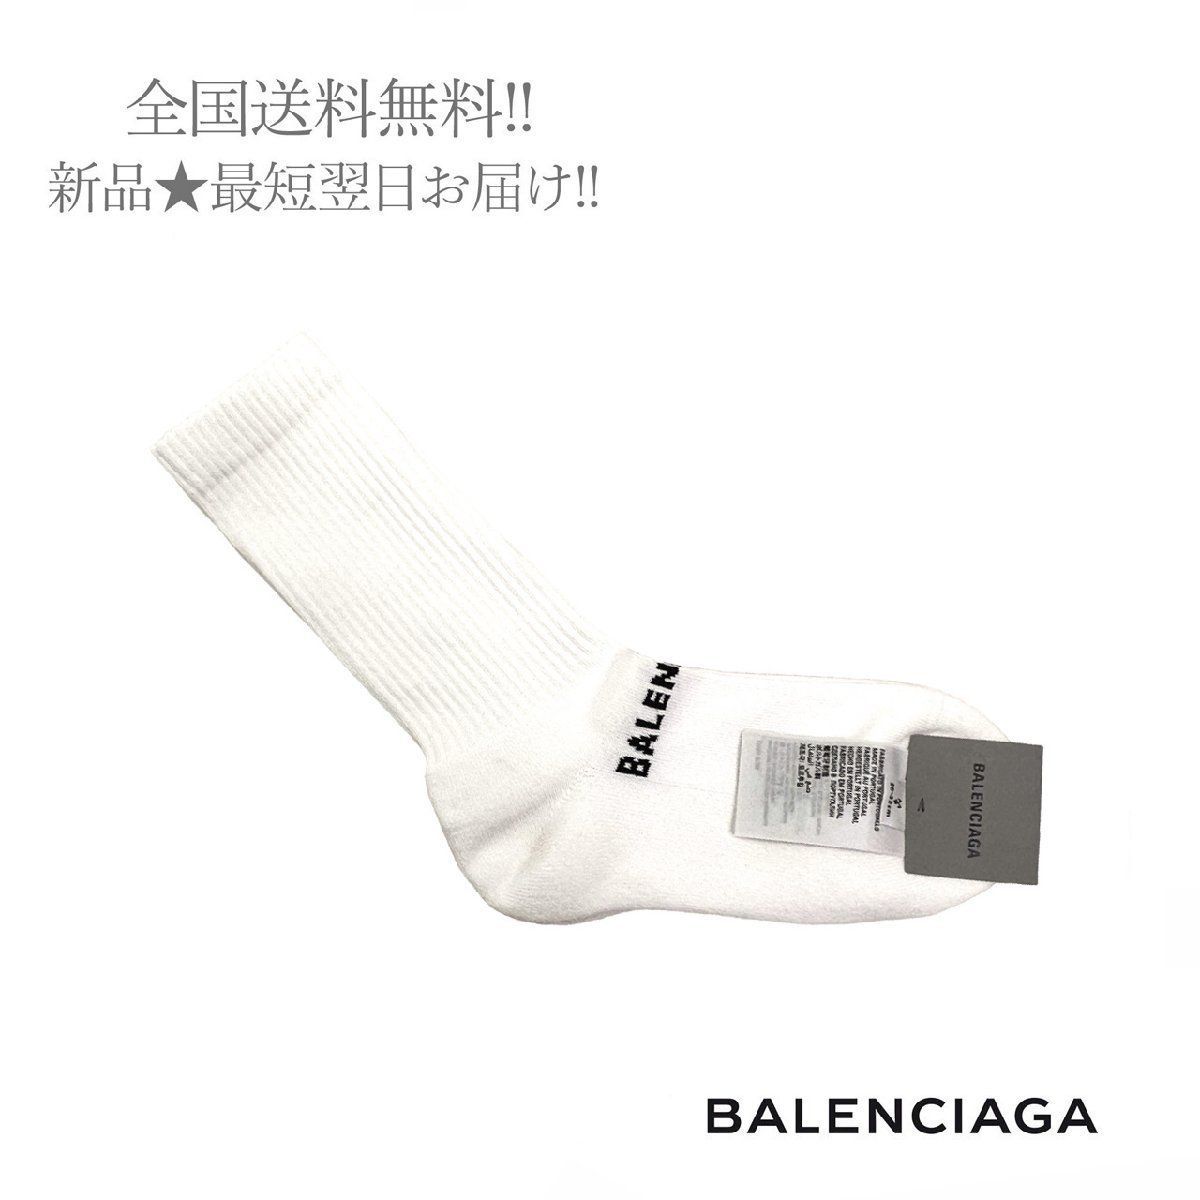 BALENCIAGA バレンシアガ ミディアムソックス 靴下 MOLD ロゴ コットン ★ 9060 WHITE × BLACK J993(S8)..